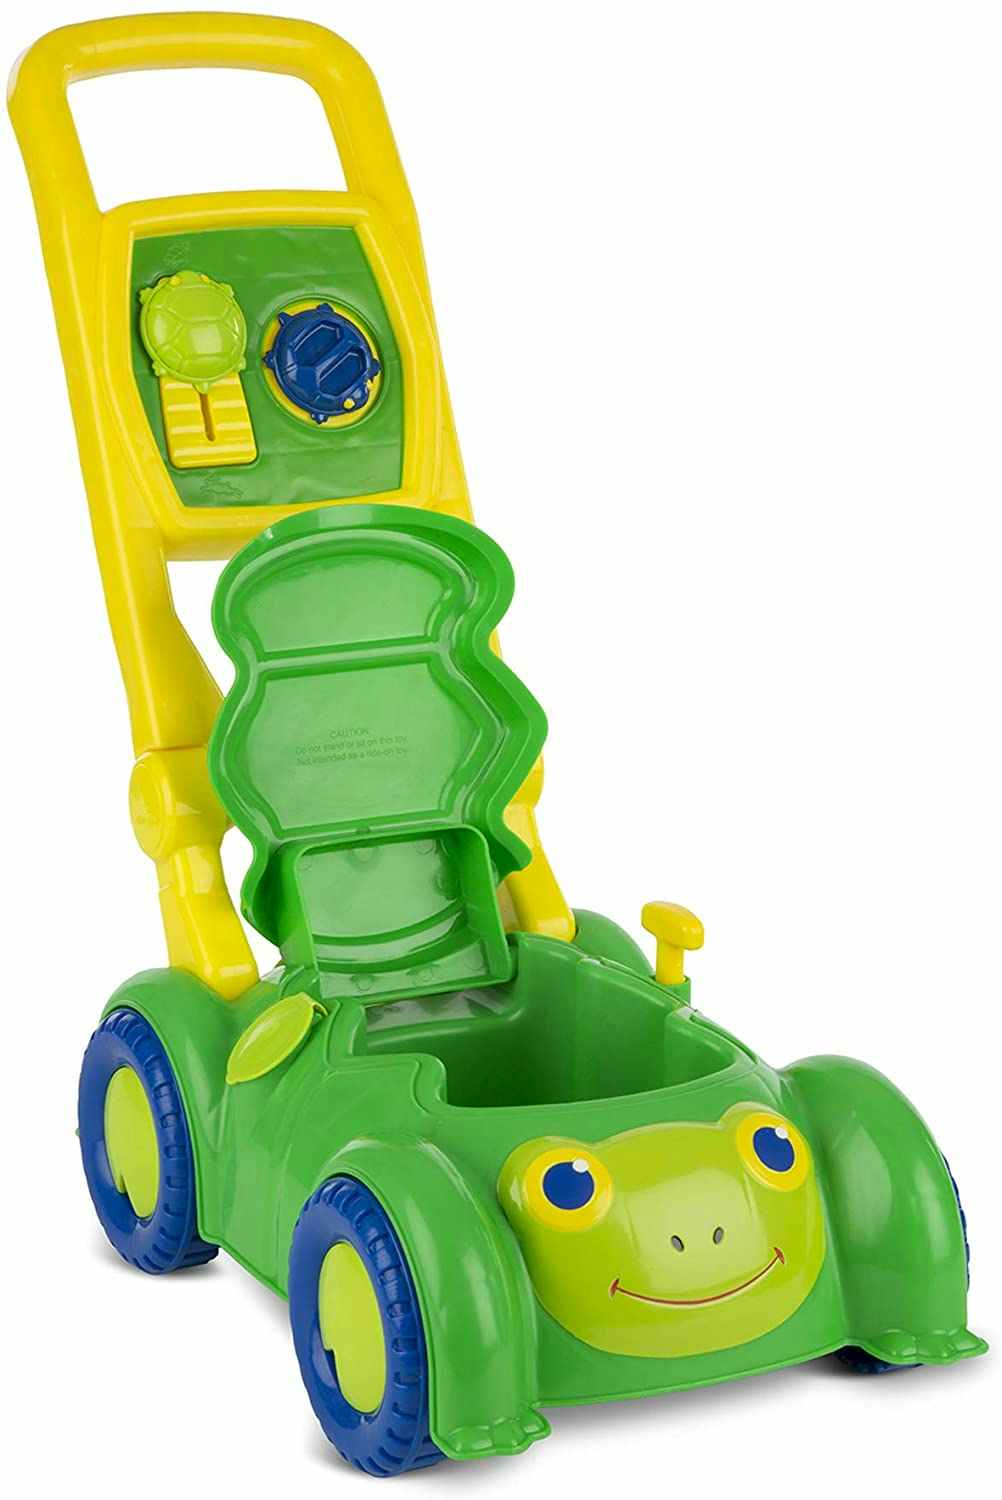 walmart-melissa-and-doug-lawn-mower-toy-2021